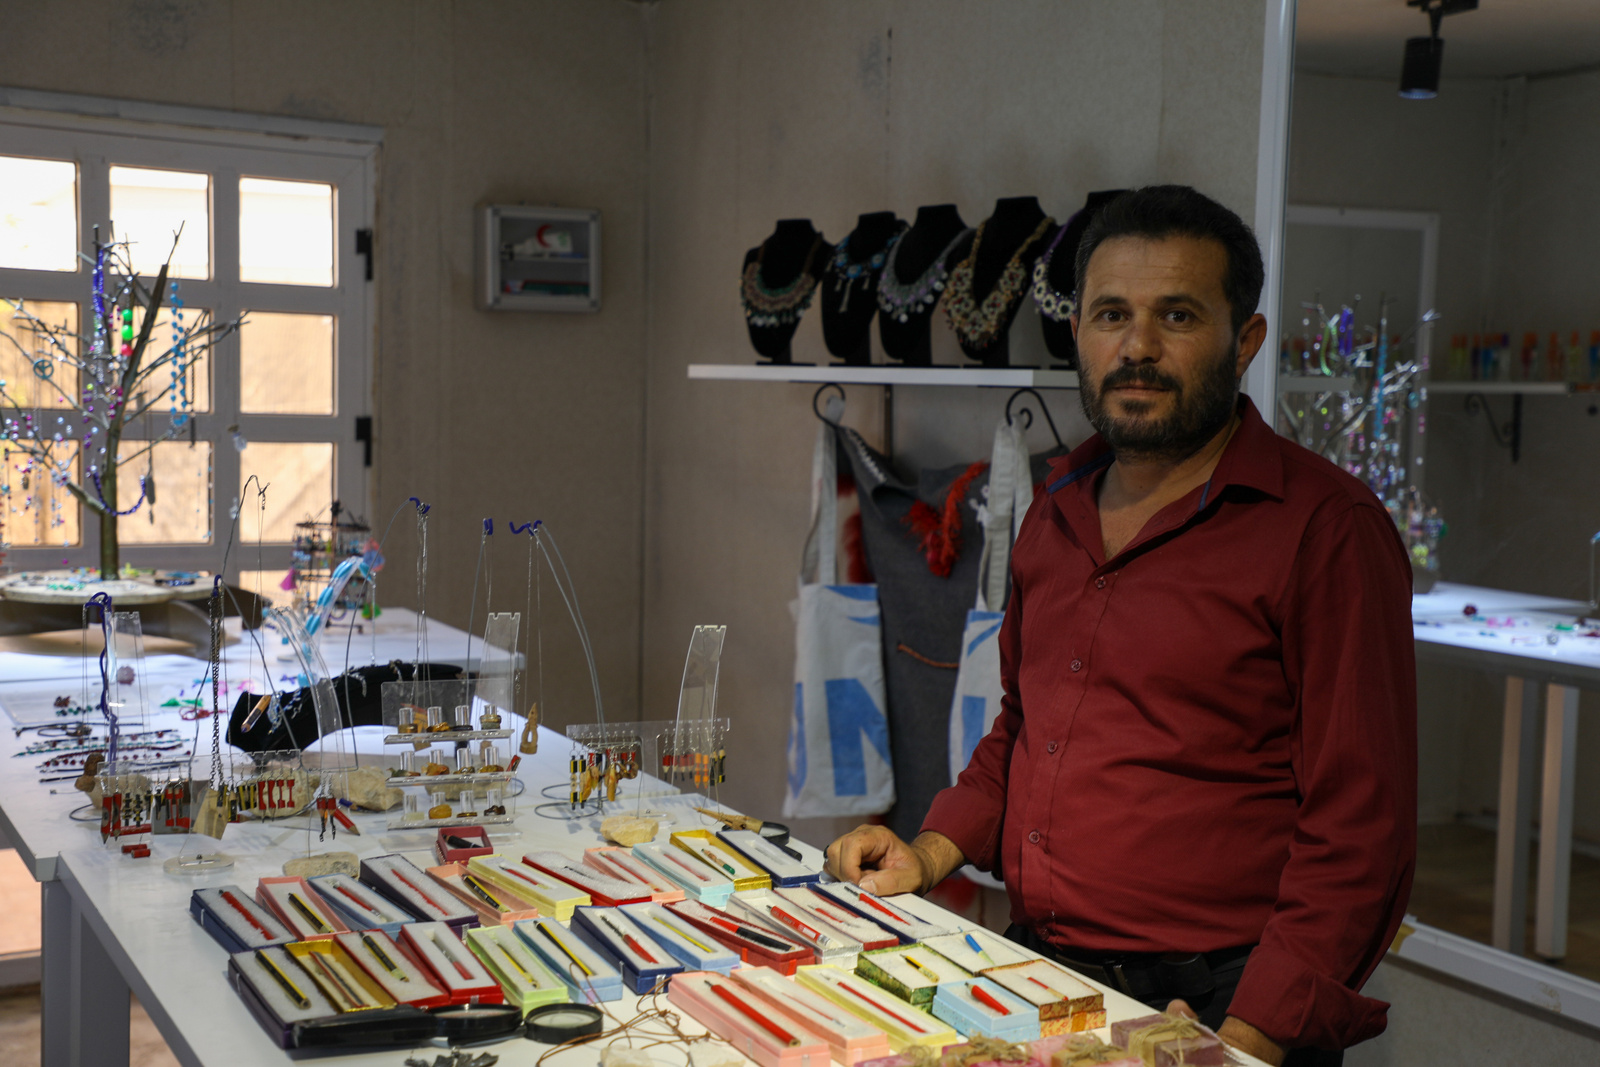 Tarek Mohamed Hamden creates intricate carvings from Za'atari Camp where he has lived since 2012.